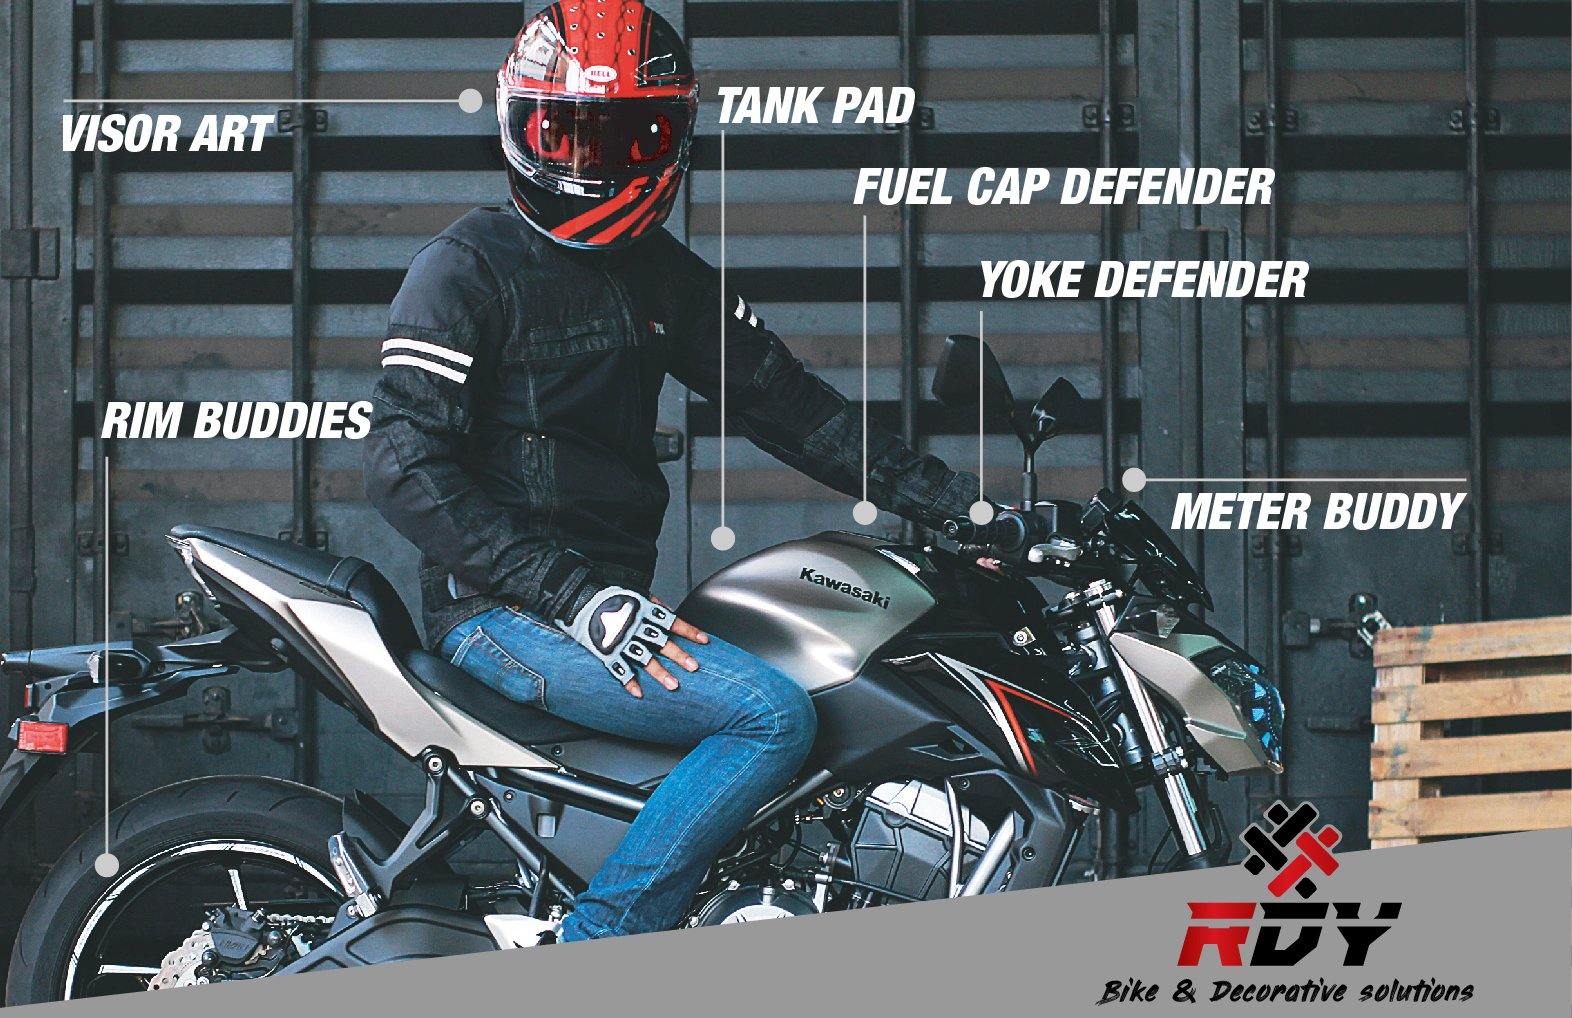 RDY Yoke Defender fits for Honda CBR900 ('98-'99) - Durian Bikers